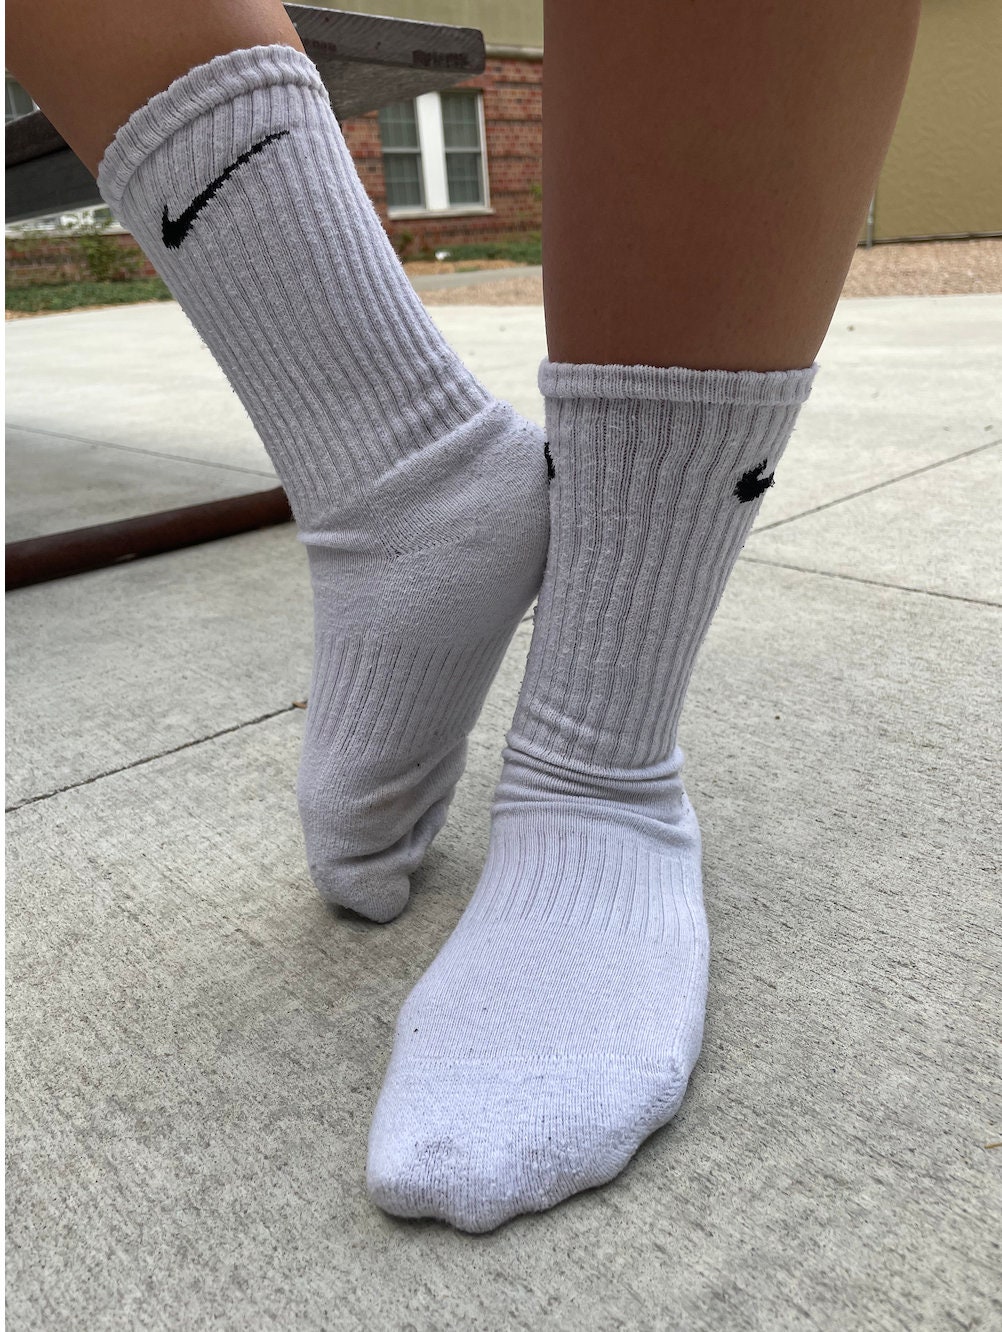 Worn Socks for sale | Only 2 left at -60%